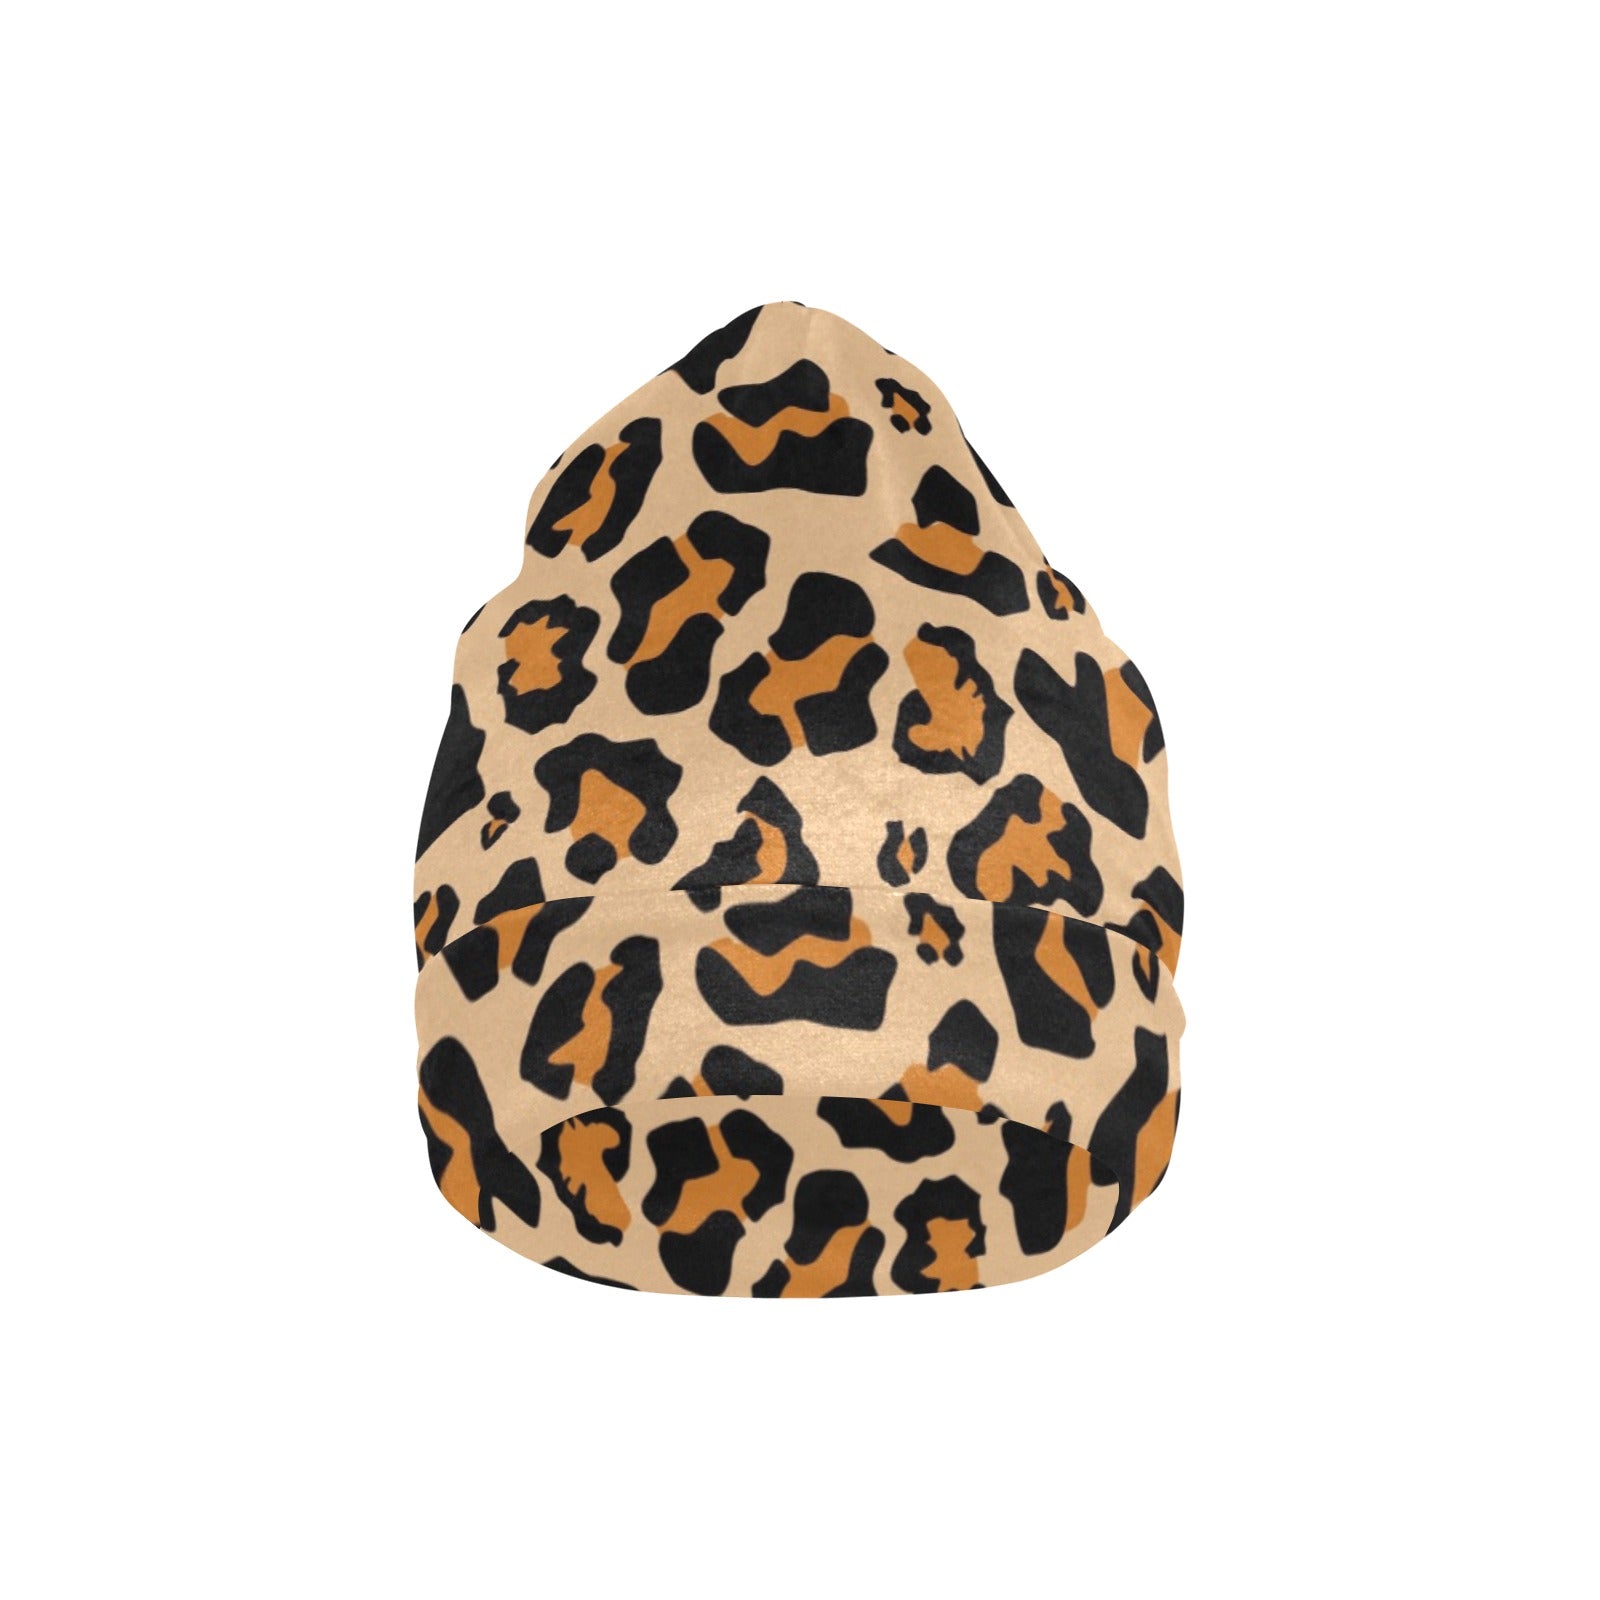 Leopard Beanie, Cheetah Animal Print Soft Fleece Party Men Women Cute Stretchy Winter Adult Aesthetic Cap Hat Gift Starcove Fashion